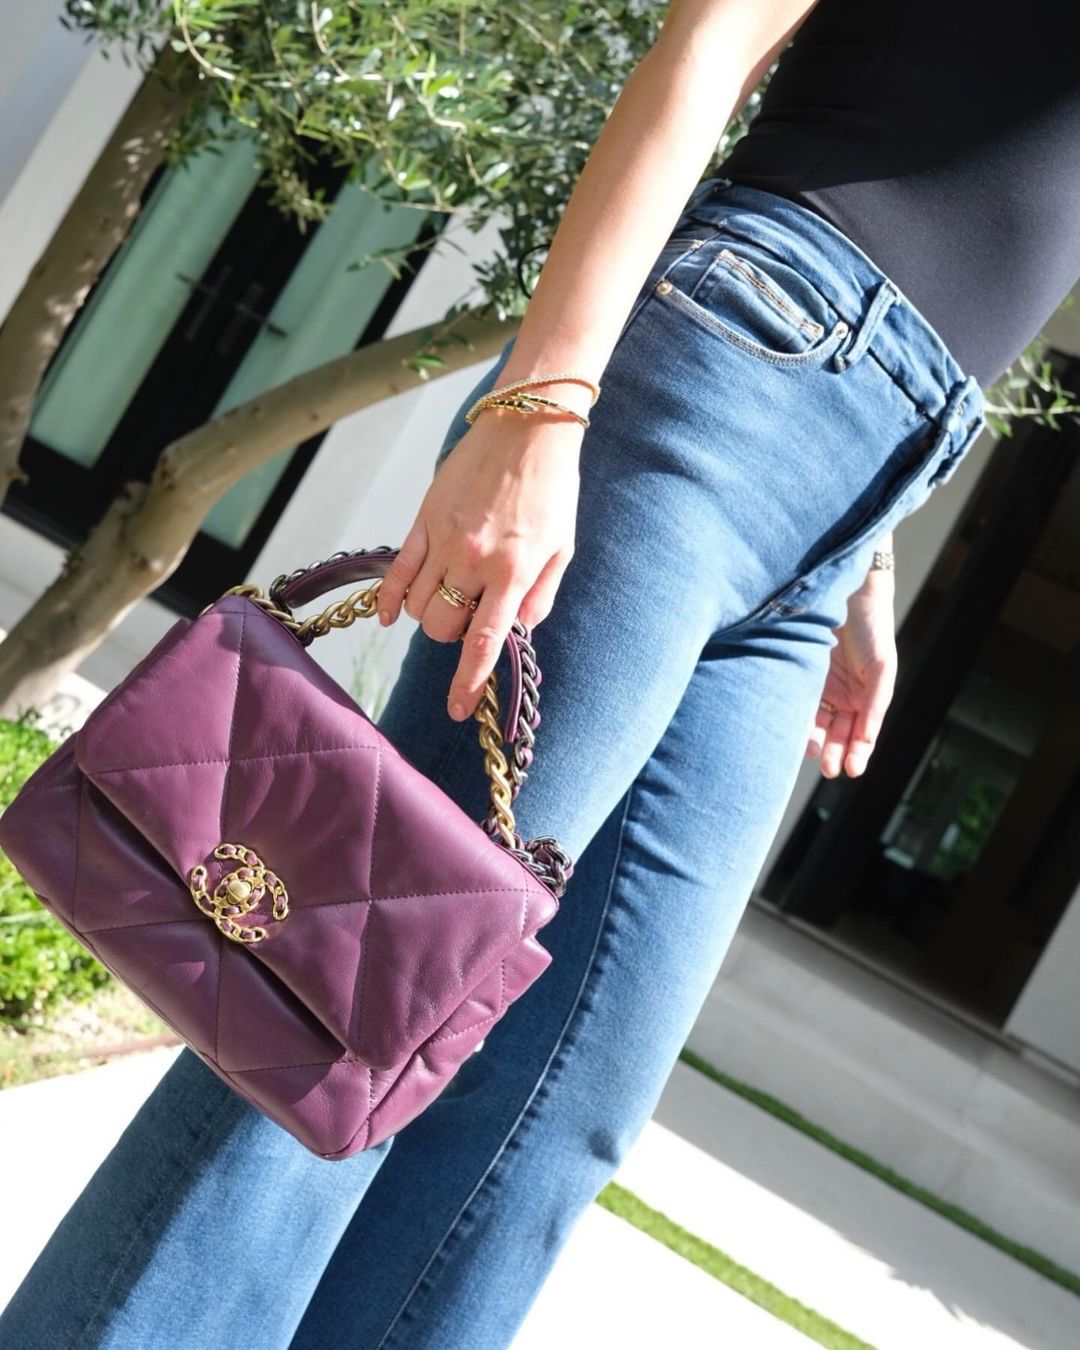 Pia Wurtzbach's designer bag is simple and sleek